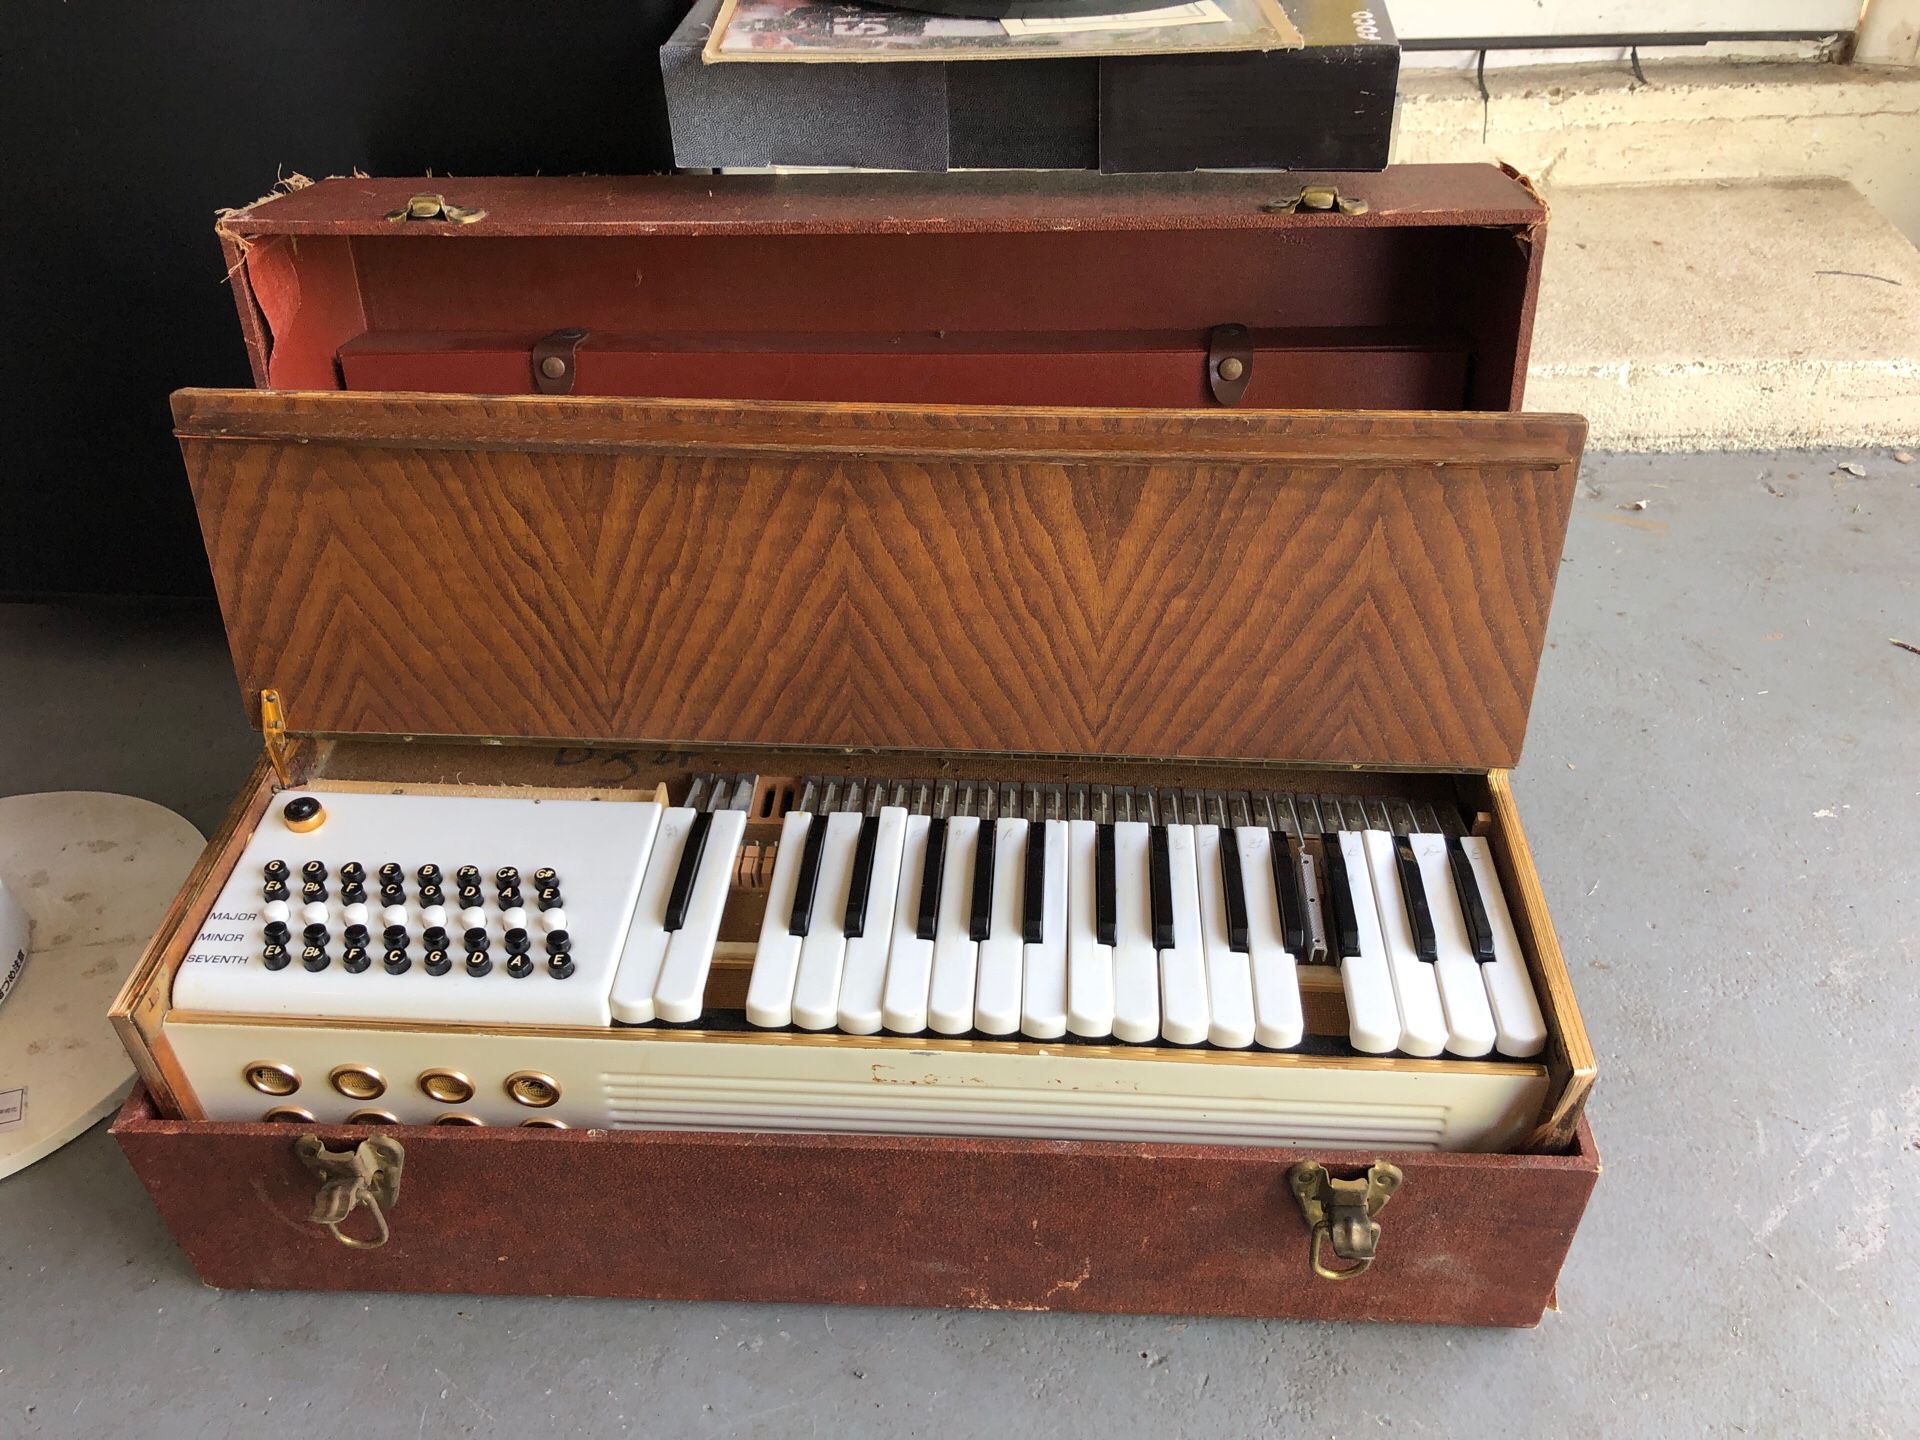 Antique electric organ